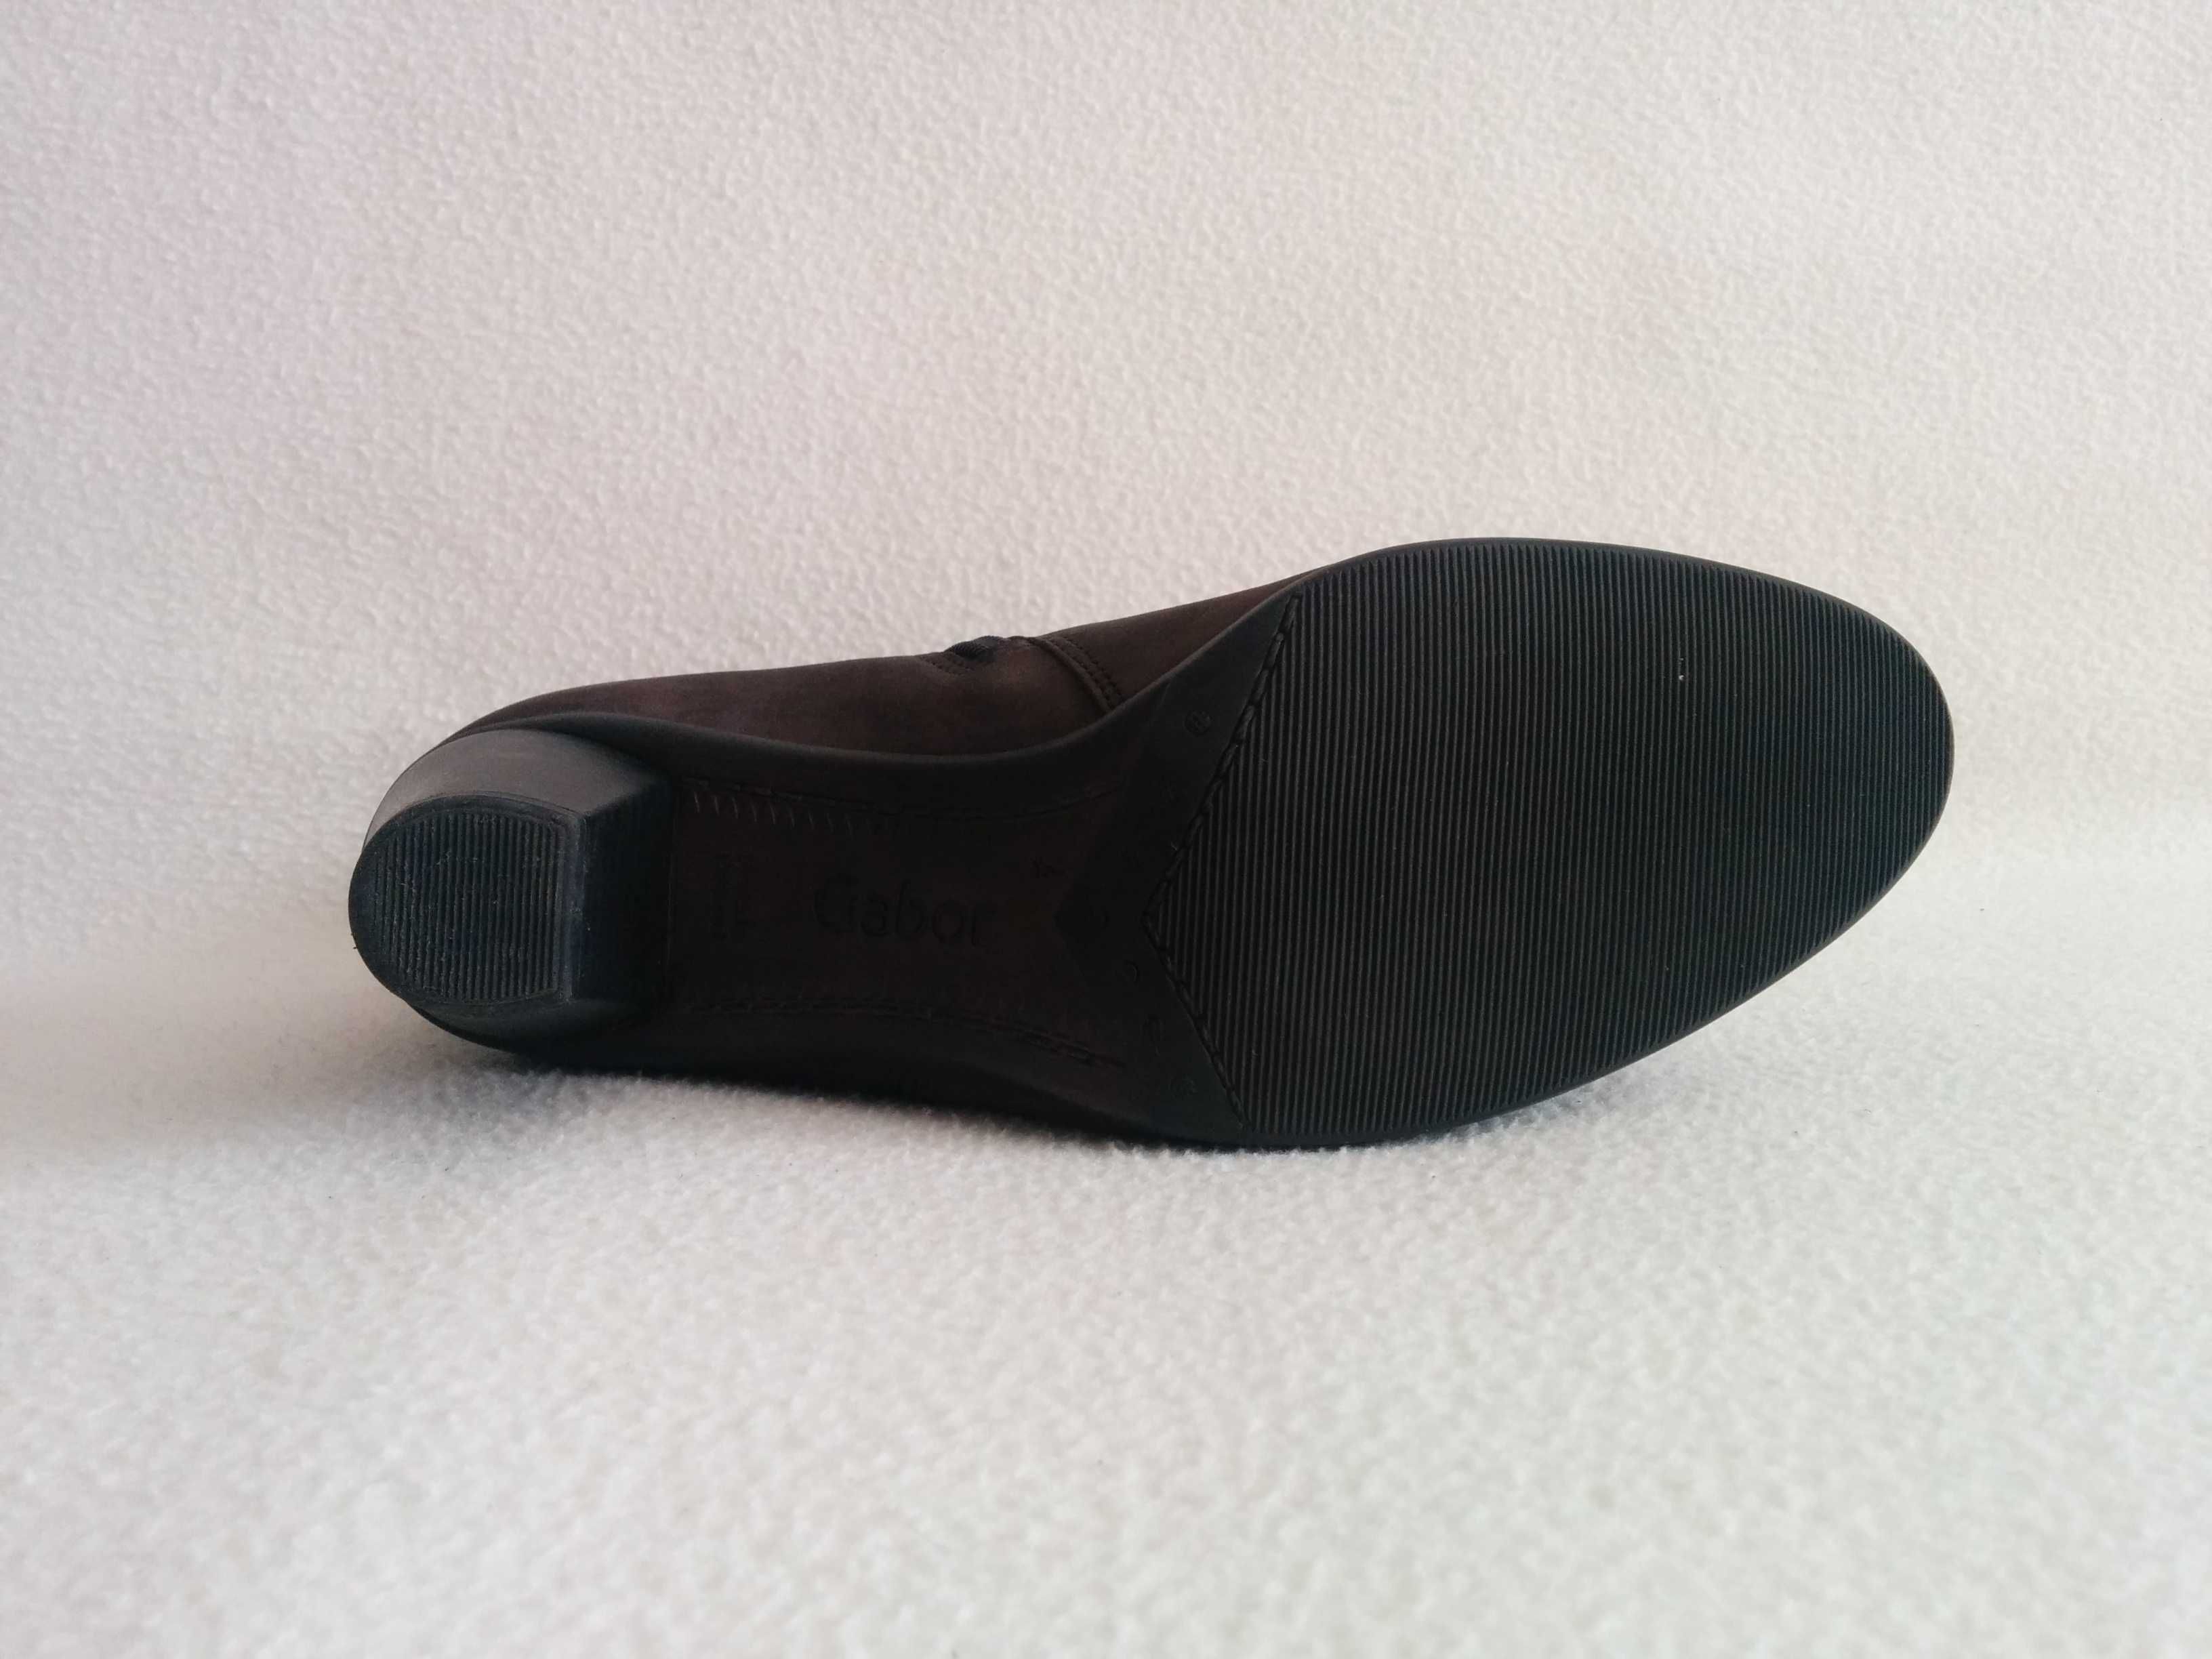 GABOR botki z nubuku - damskie buty ze skóry naturalnej